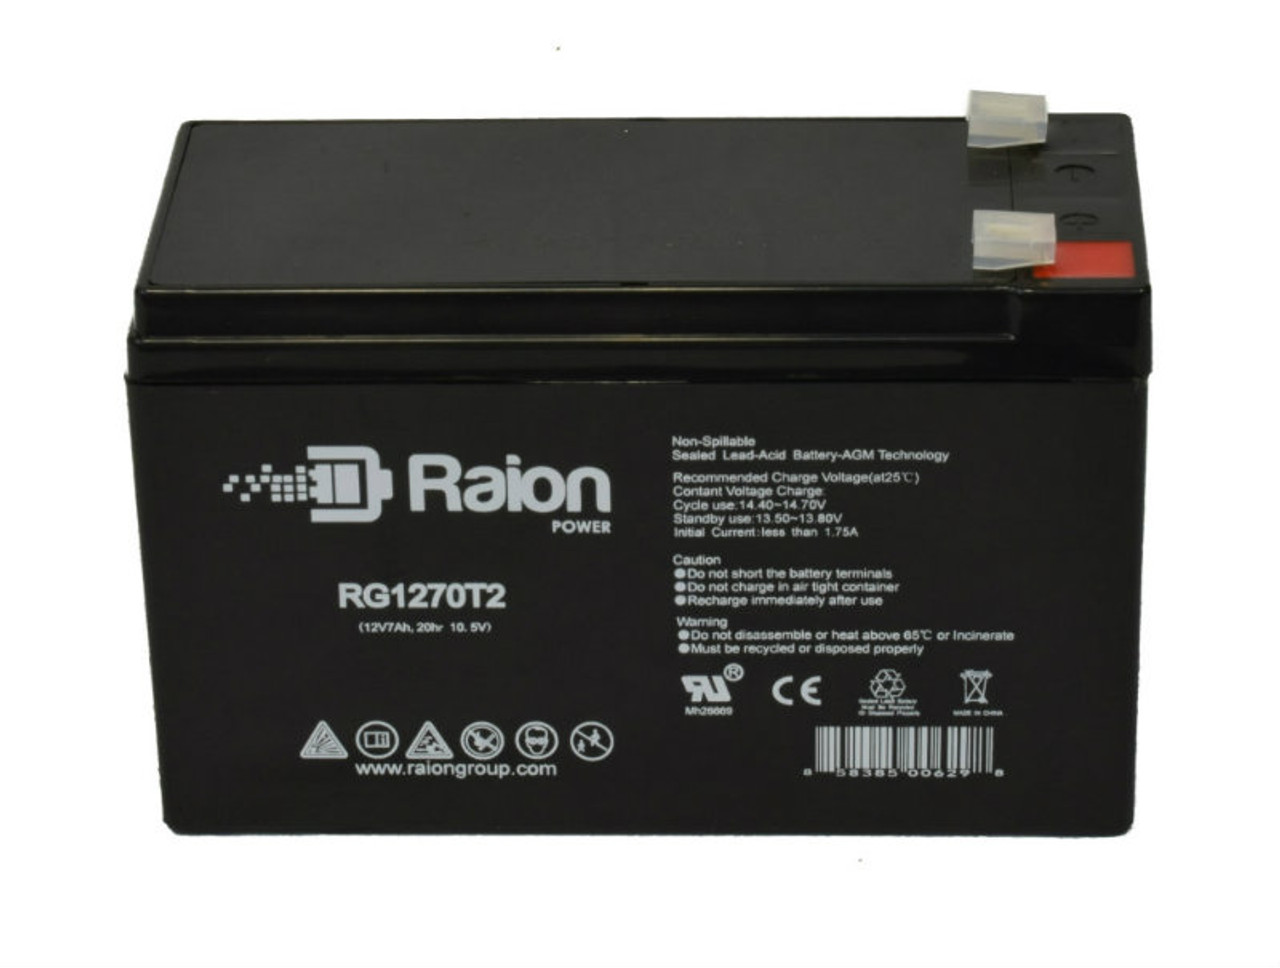 Raion Power RG1270T2 12V 7Ah Lead Acid Battery for Bright Way Group BWG 1270F2